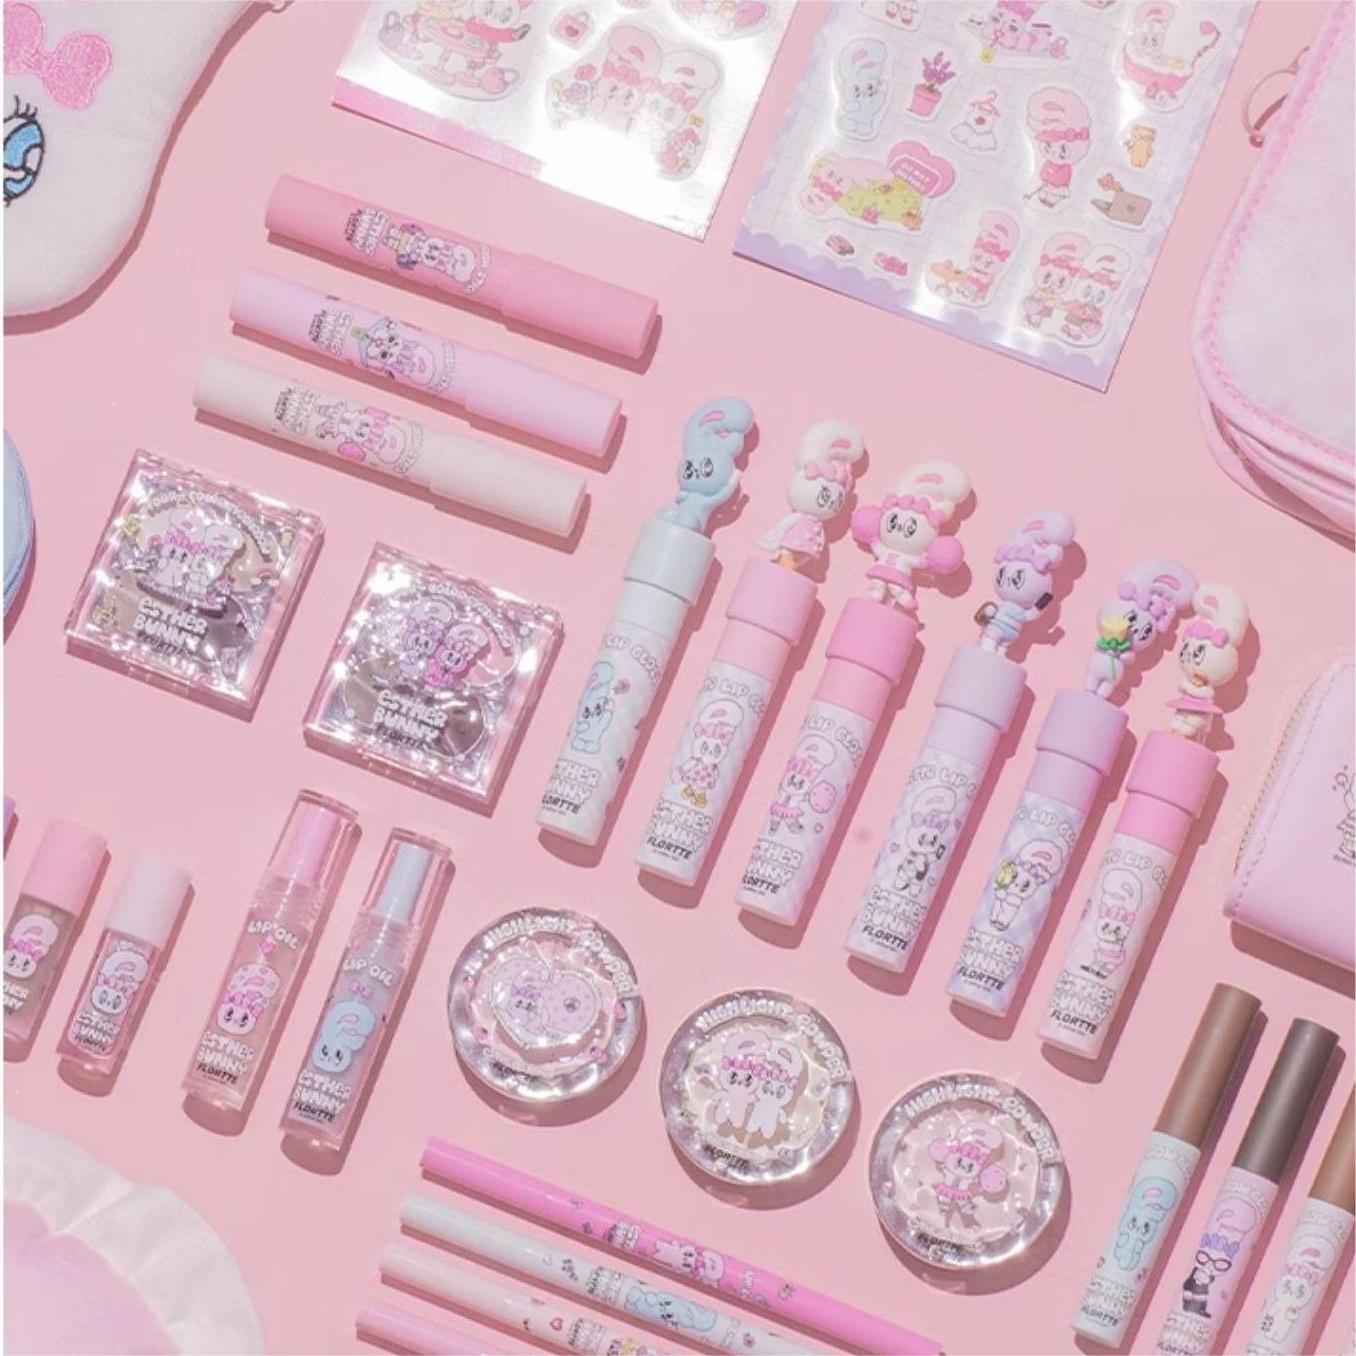 Flortte X Esther Bunny Born Pink Series Gift Set 花洛莉亚x艾丝乐小兔天生粉红系列联名大礼盒